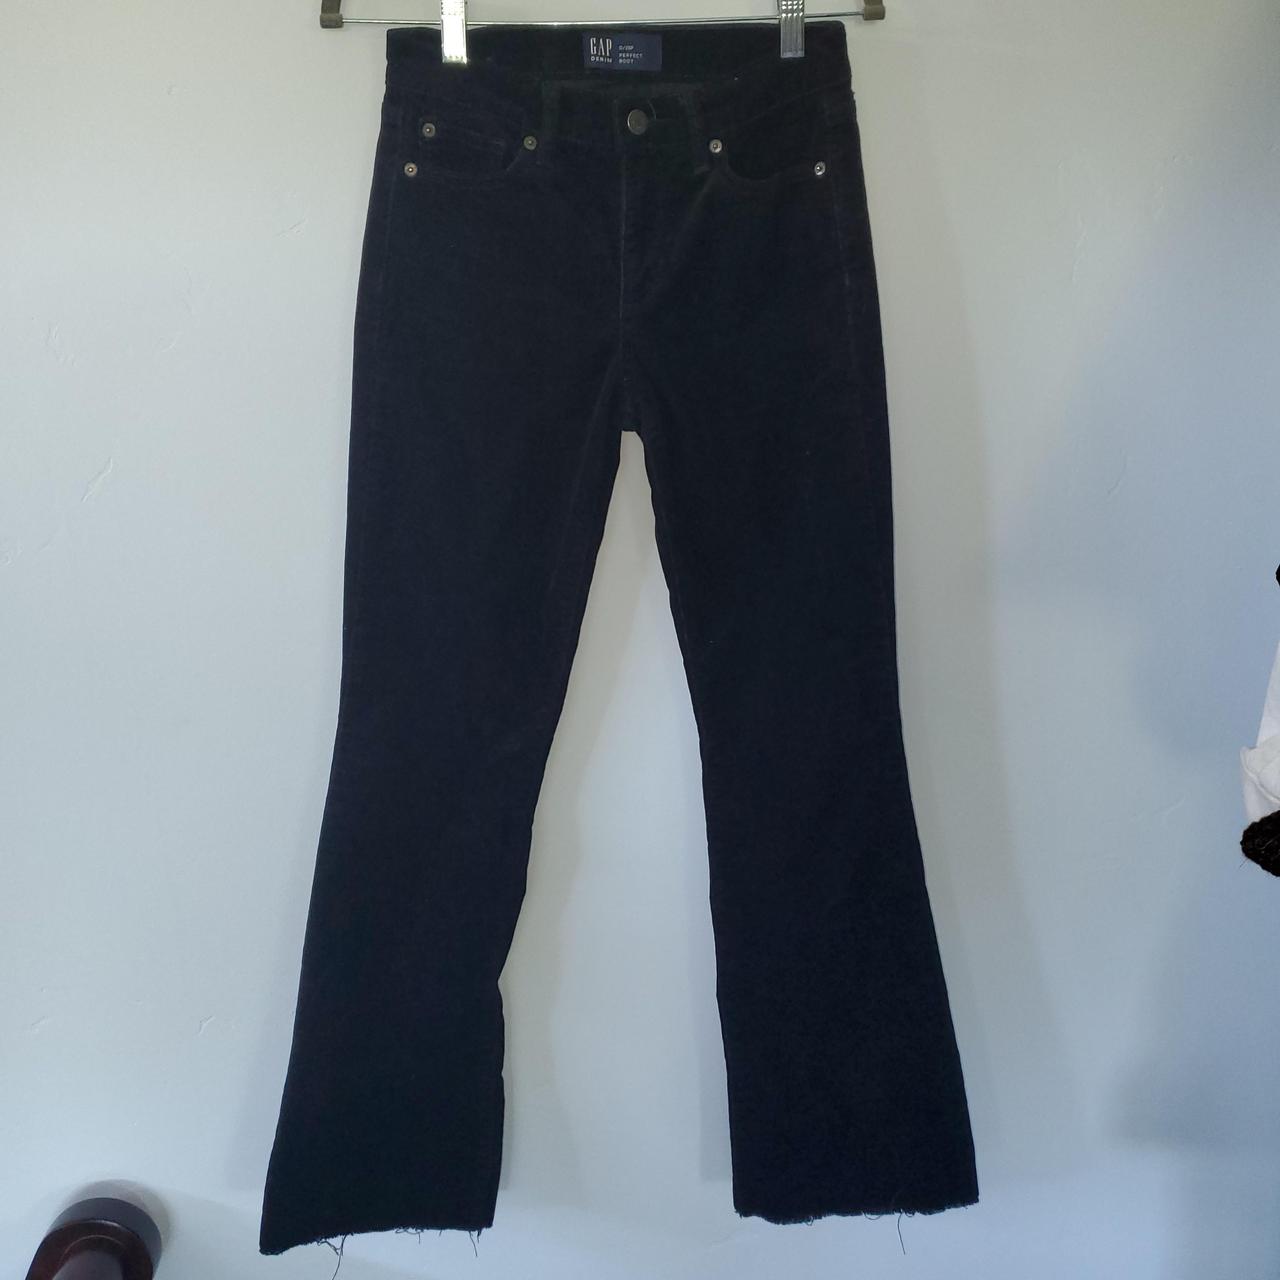 Gap bootcut corduroy jeans. Waist size 25